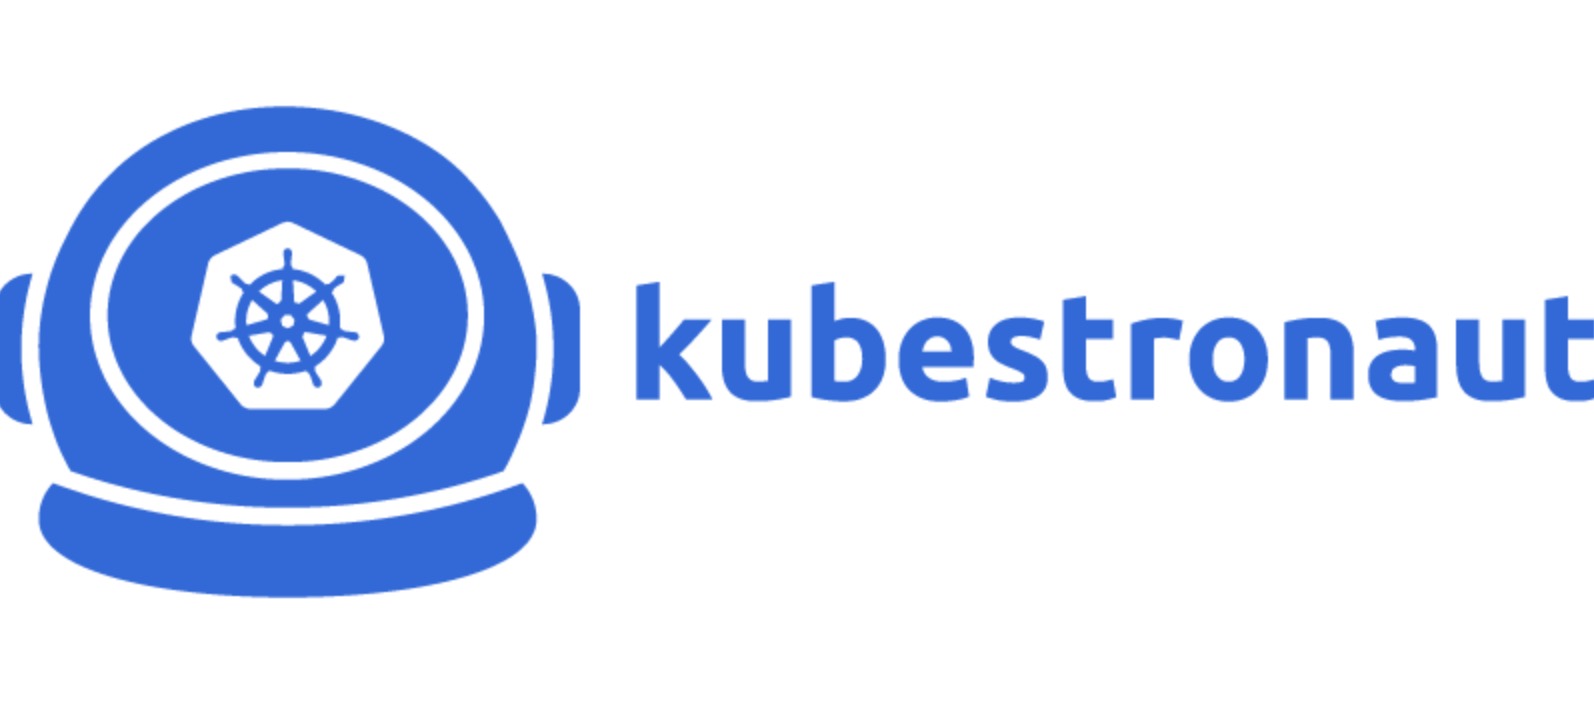 CNCF 启动 Kubestronaut 计划展示K8S专家们火箭般的 Kubernetes 技能